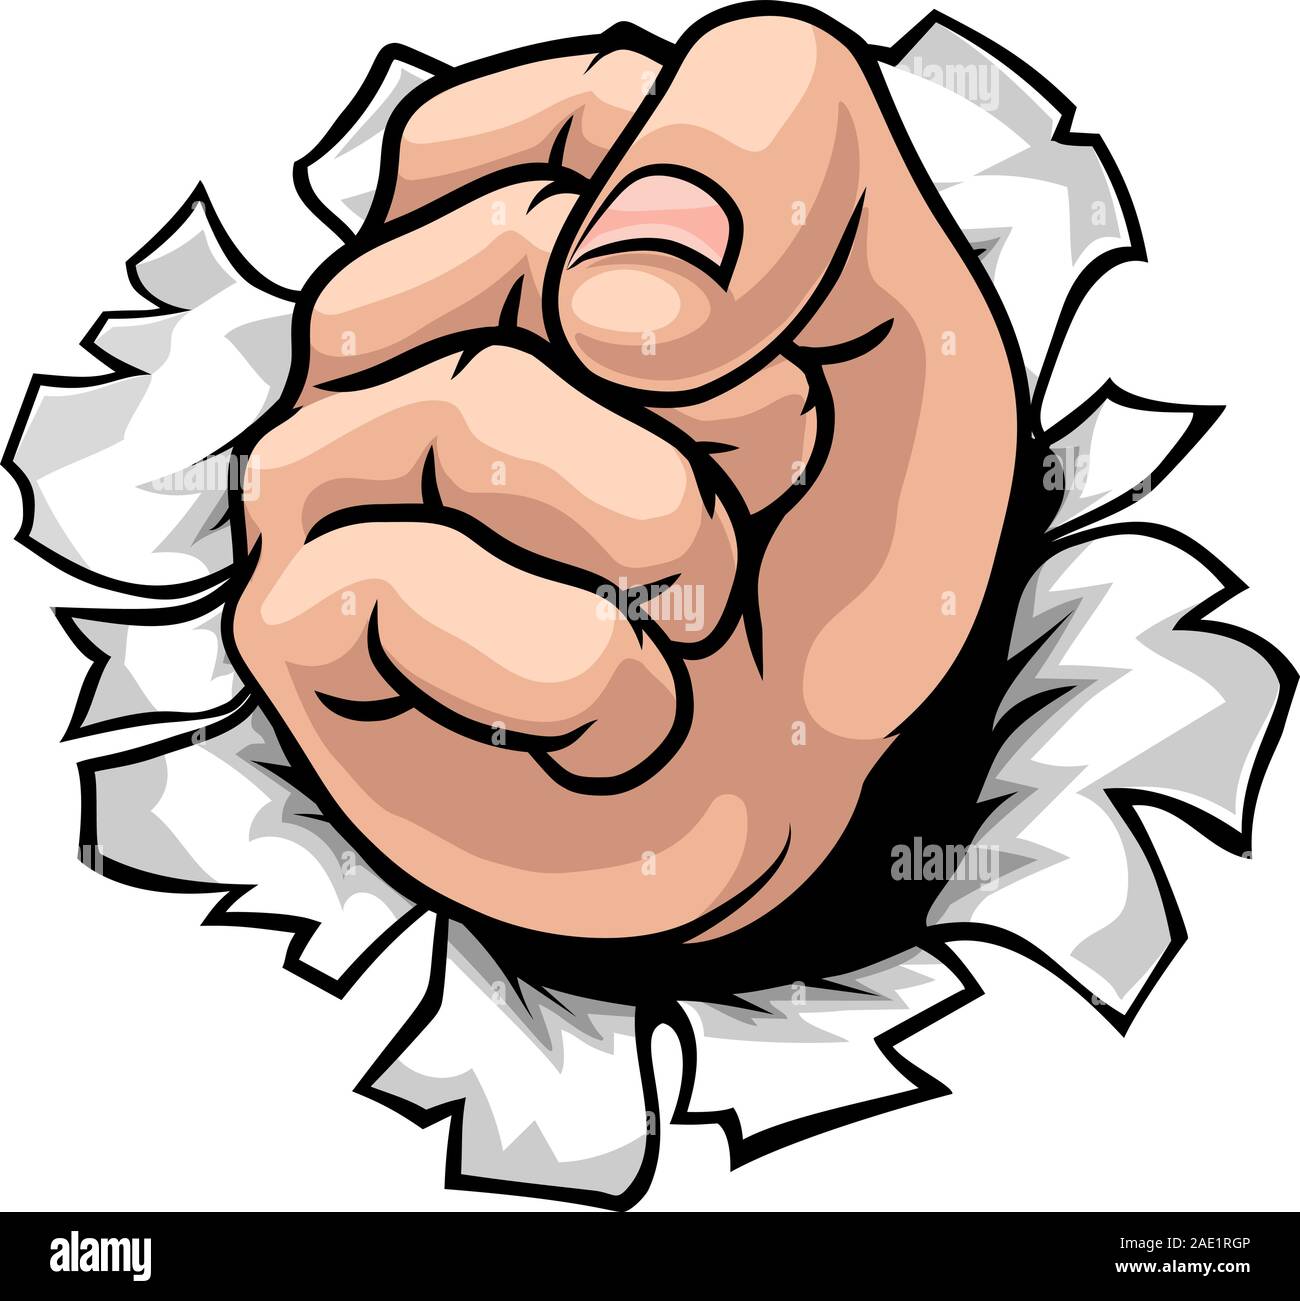 Fist Hand Punching Through Wall Cartoon Stock Vector